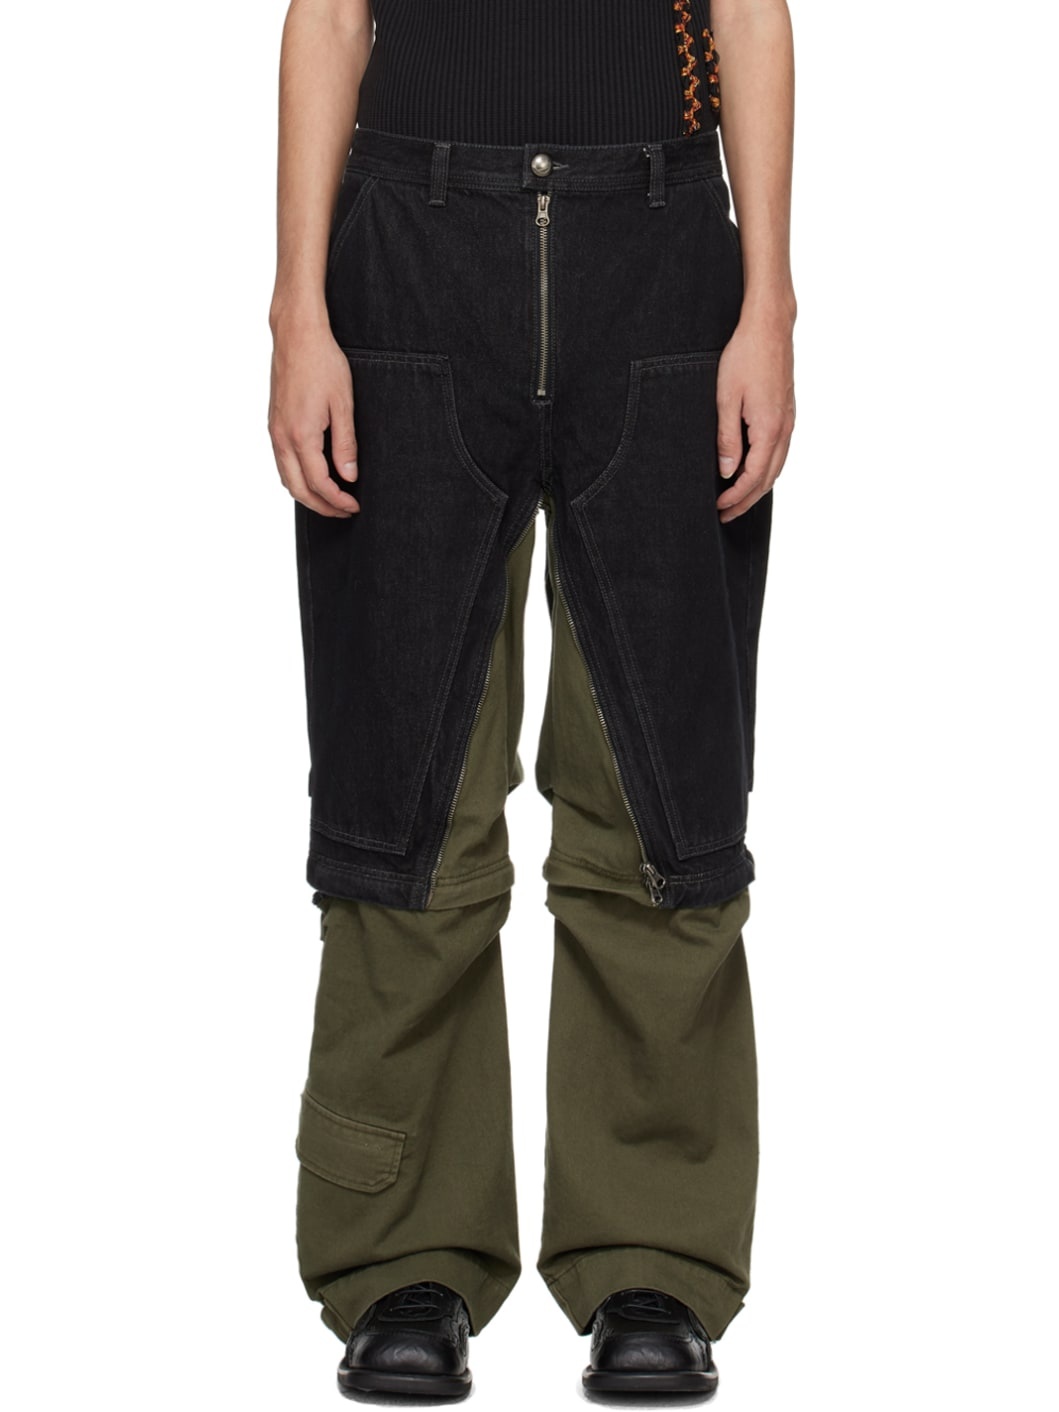 Black & Khaki Milly Jeans - 1